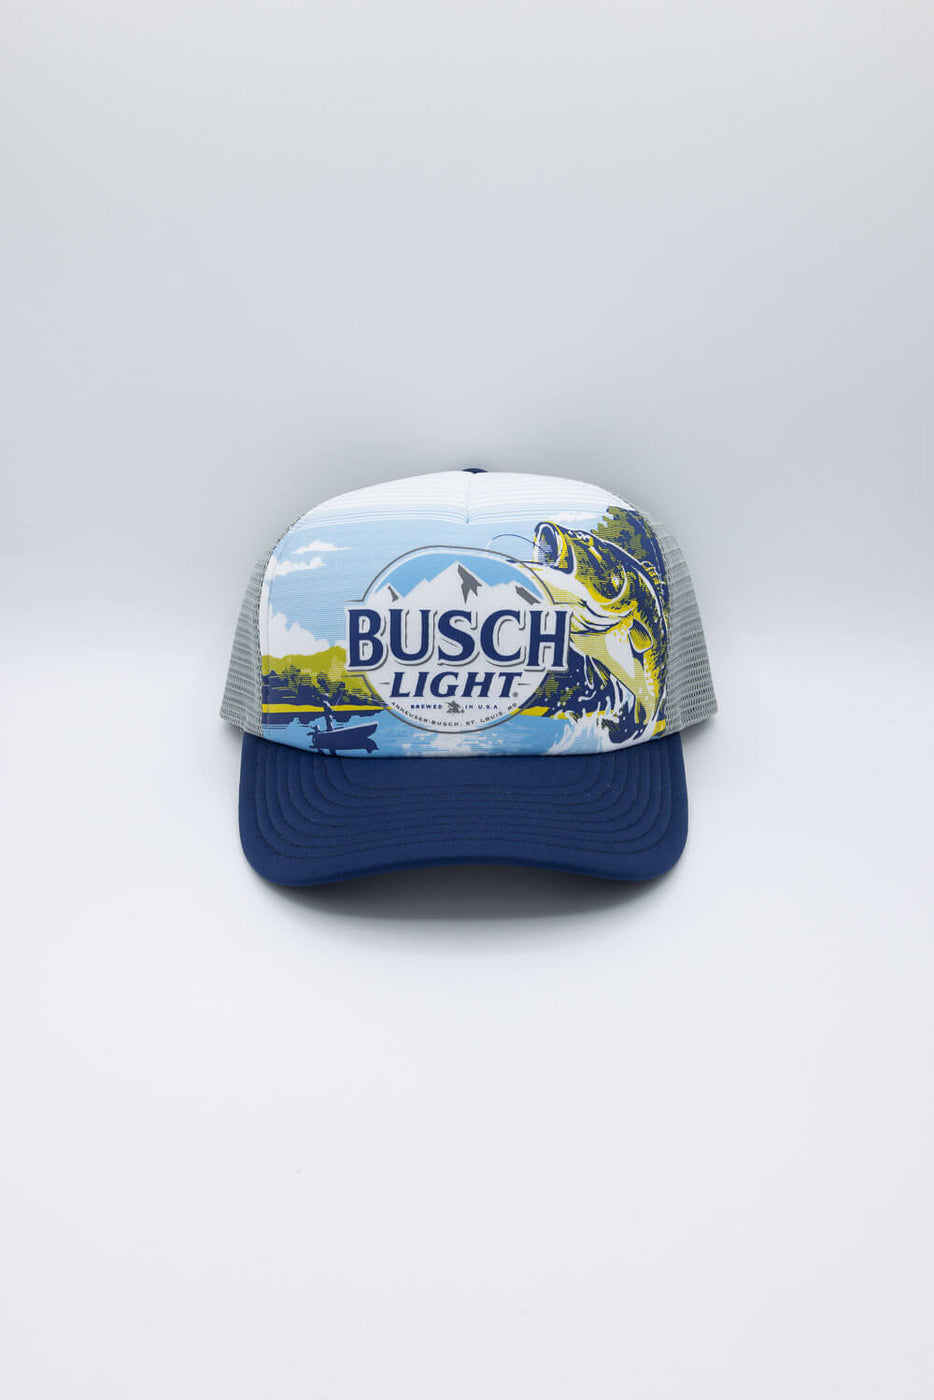 Brew City Busch Light Bass Foam Trucker Hat for Men in Blue